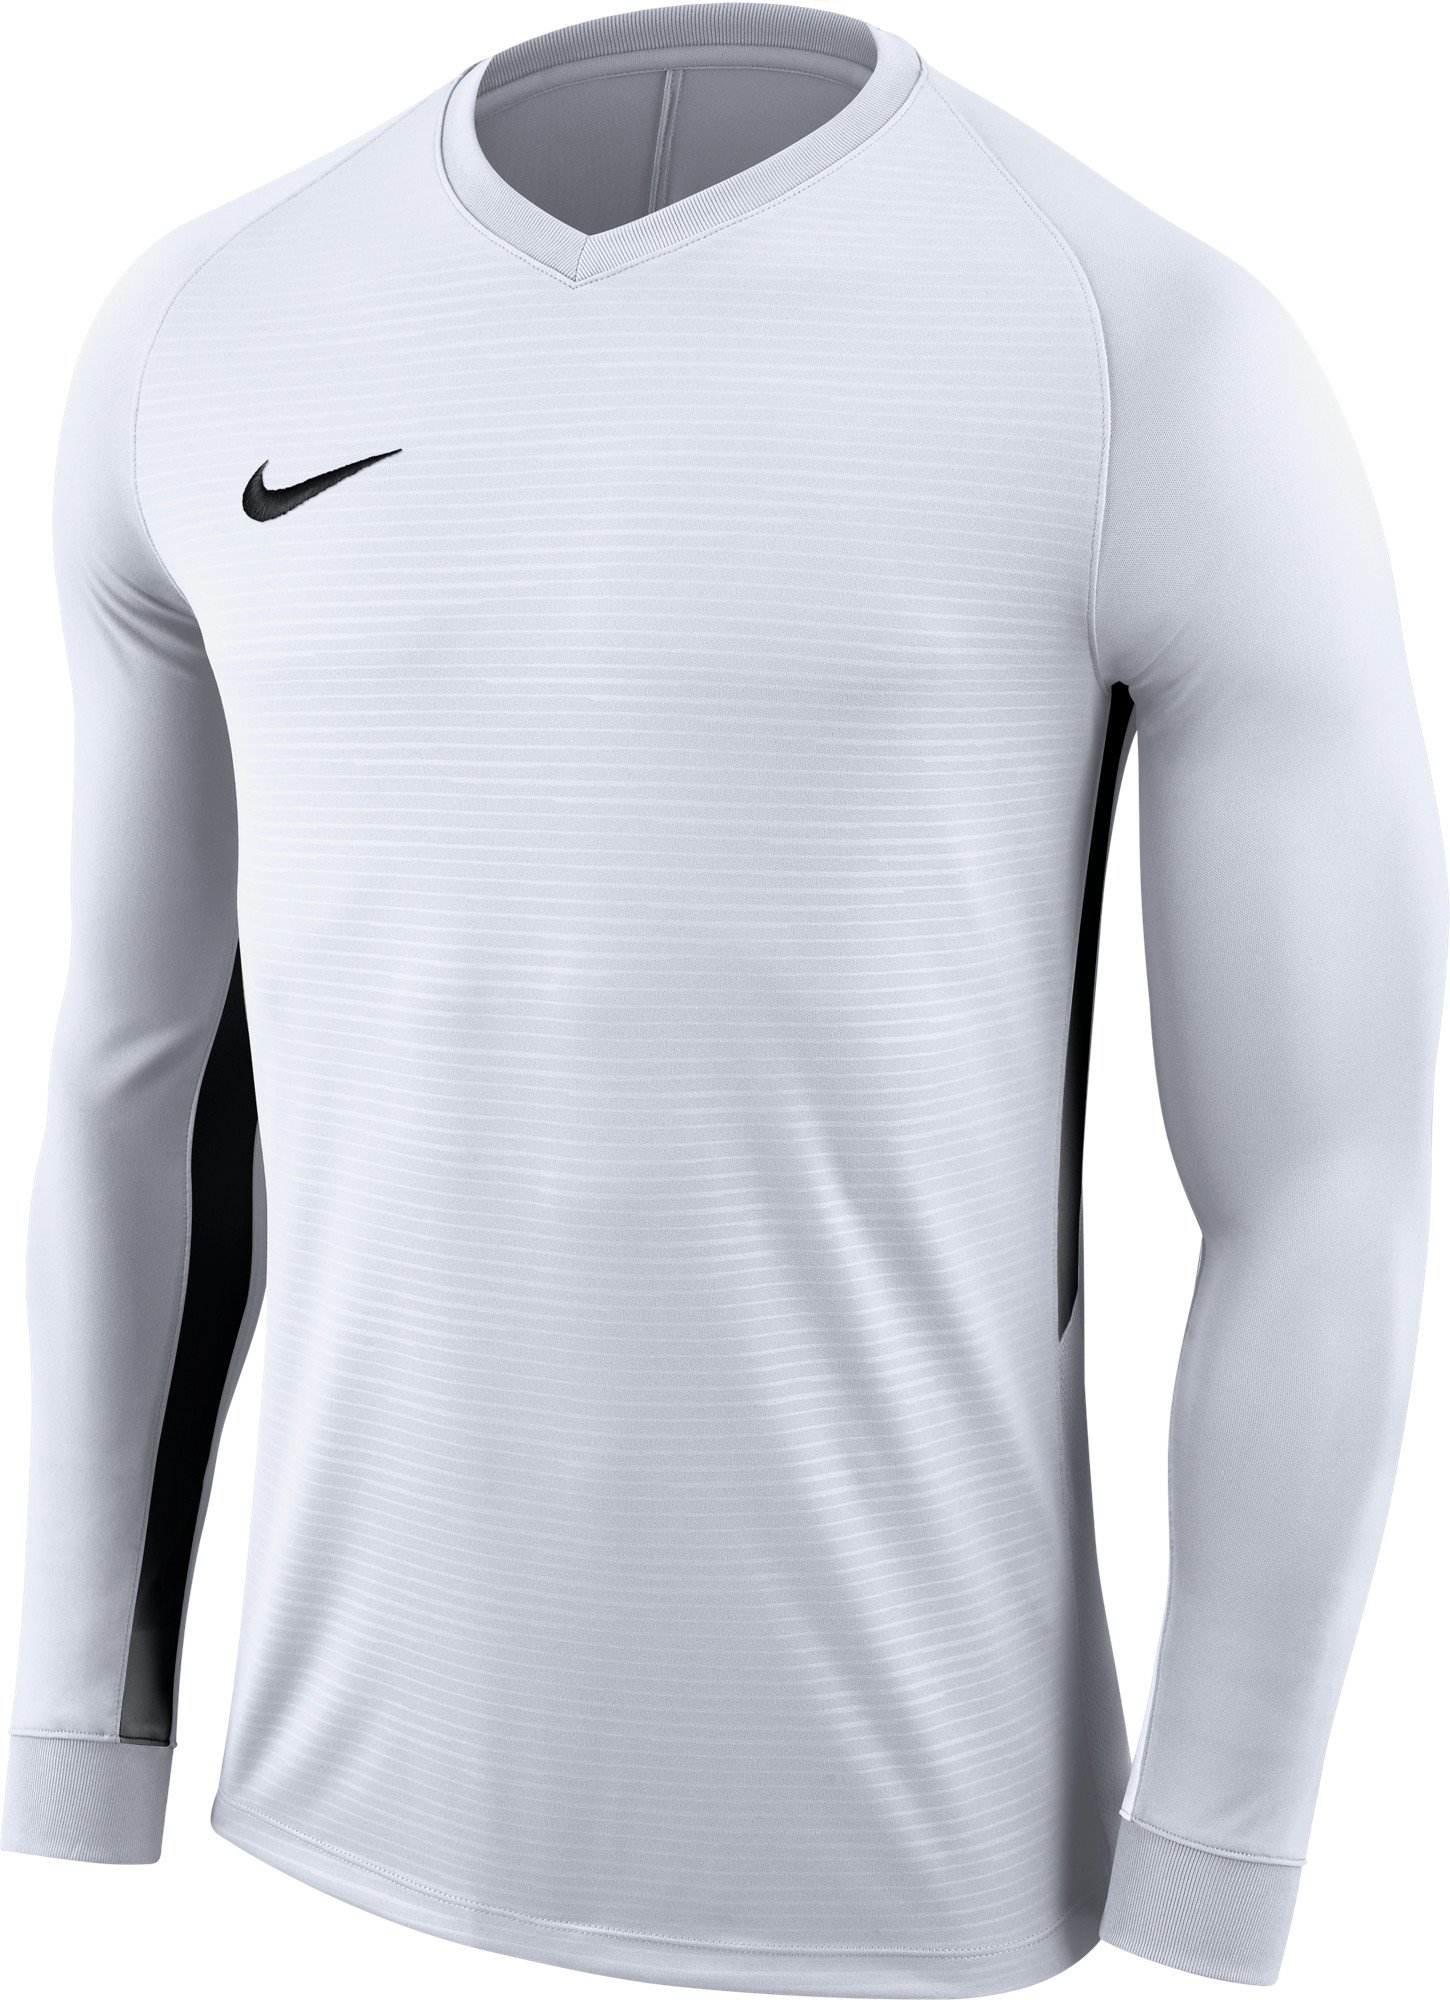 Long-sleeve Jersey Nike M NK DRY TIEMPO PREM JSY LS